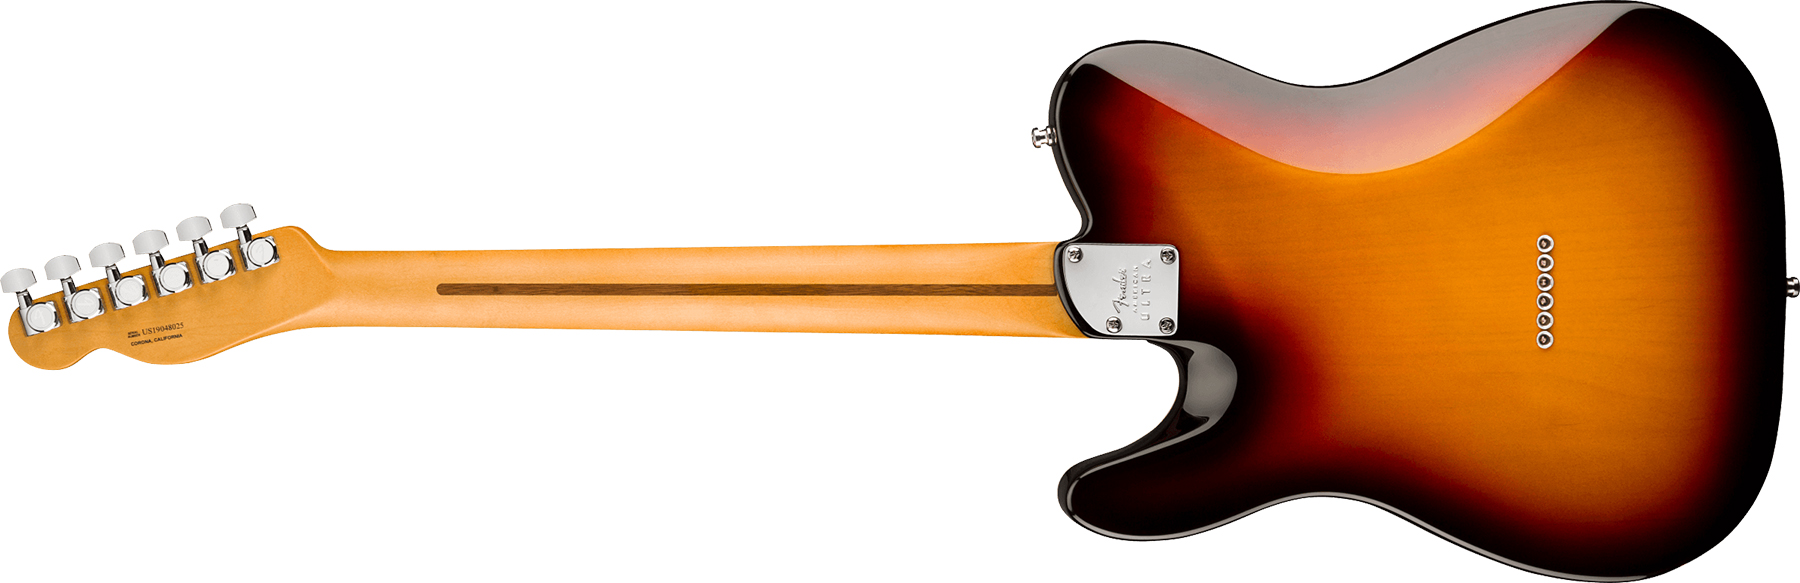 Fender Tele American Ultra 2019 Usa Rw - Ultraburst - Tel shape electric guitar - Variation 1